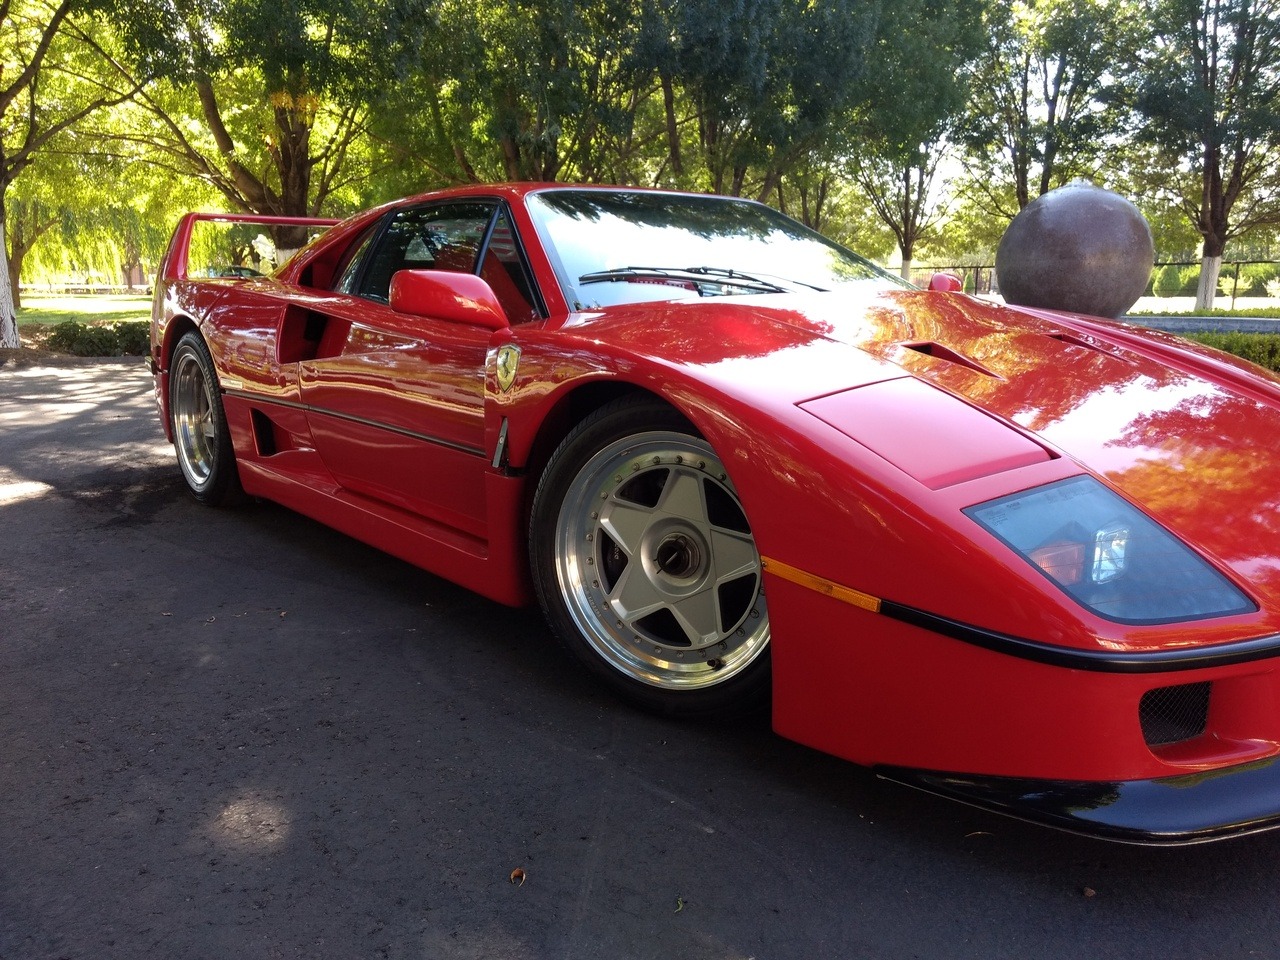 GOODFELLA — supppr-nova: Ferrari F40 LM- Because racecar. Just